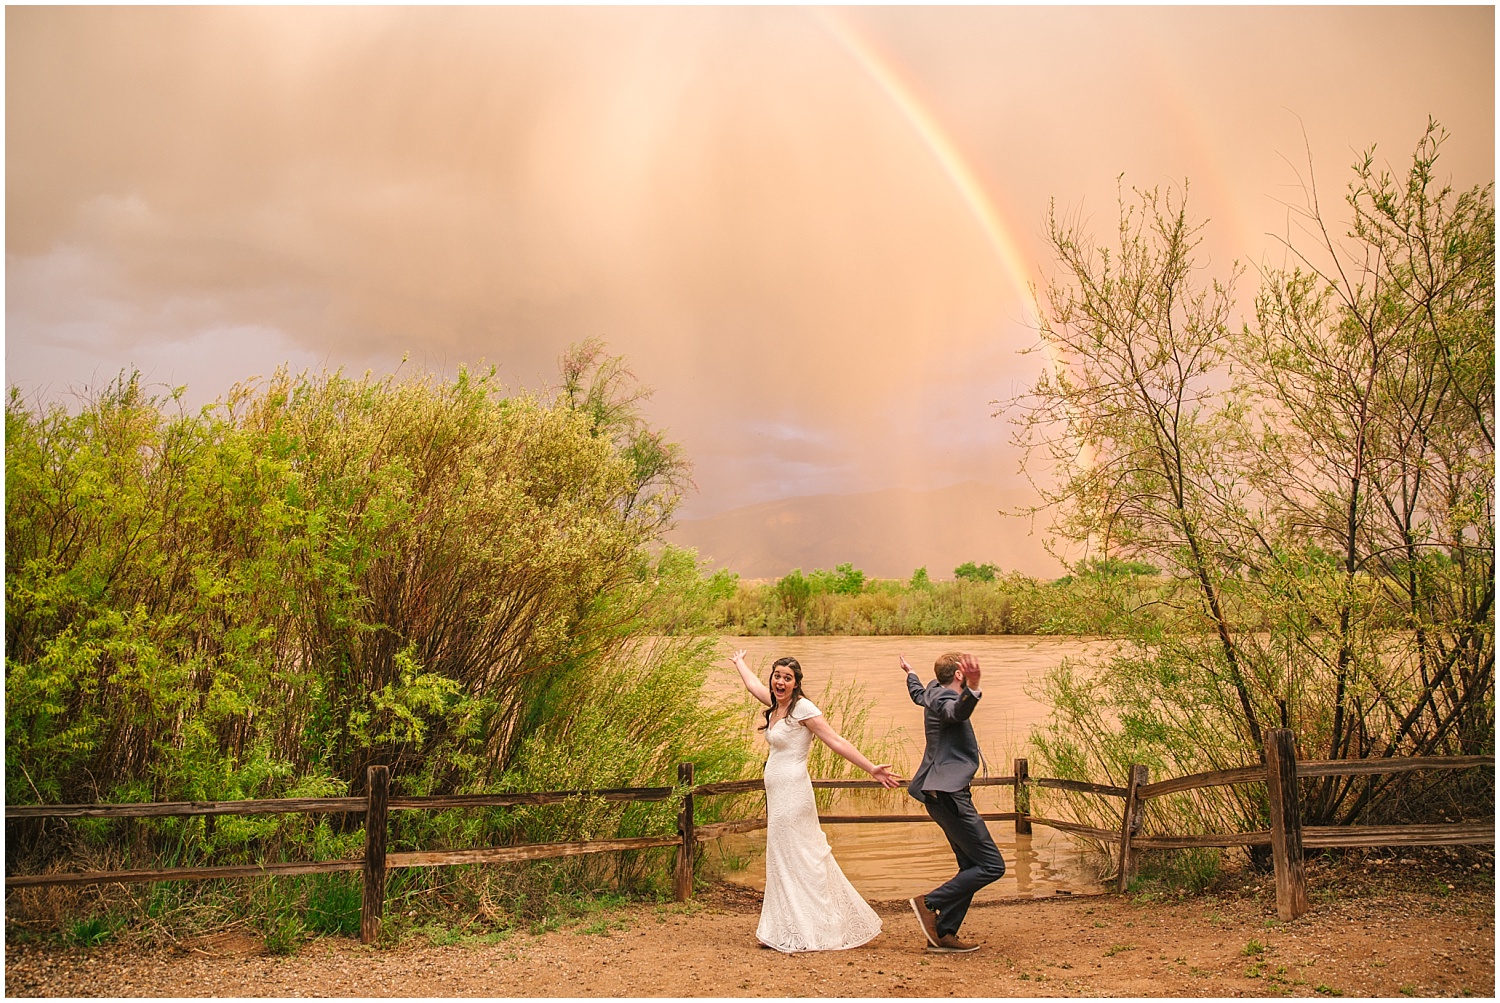 Double rainbow over dancing bride and groom at Hyatt Regency Tamaya wedding in New Mexico